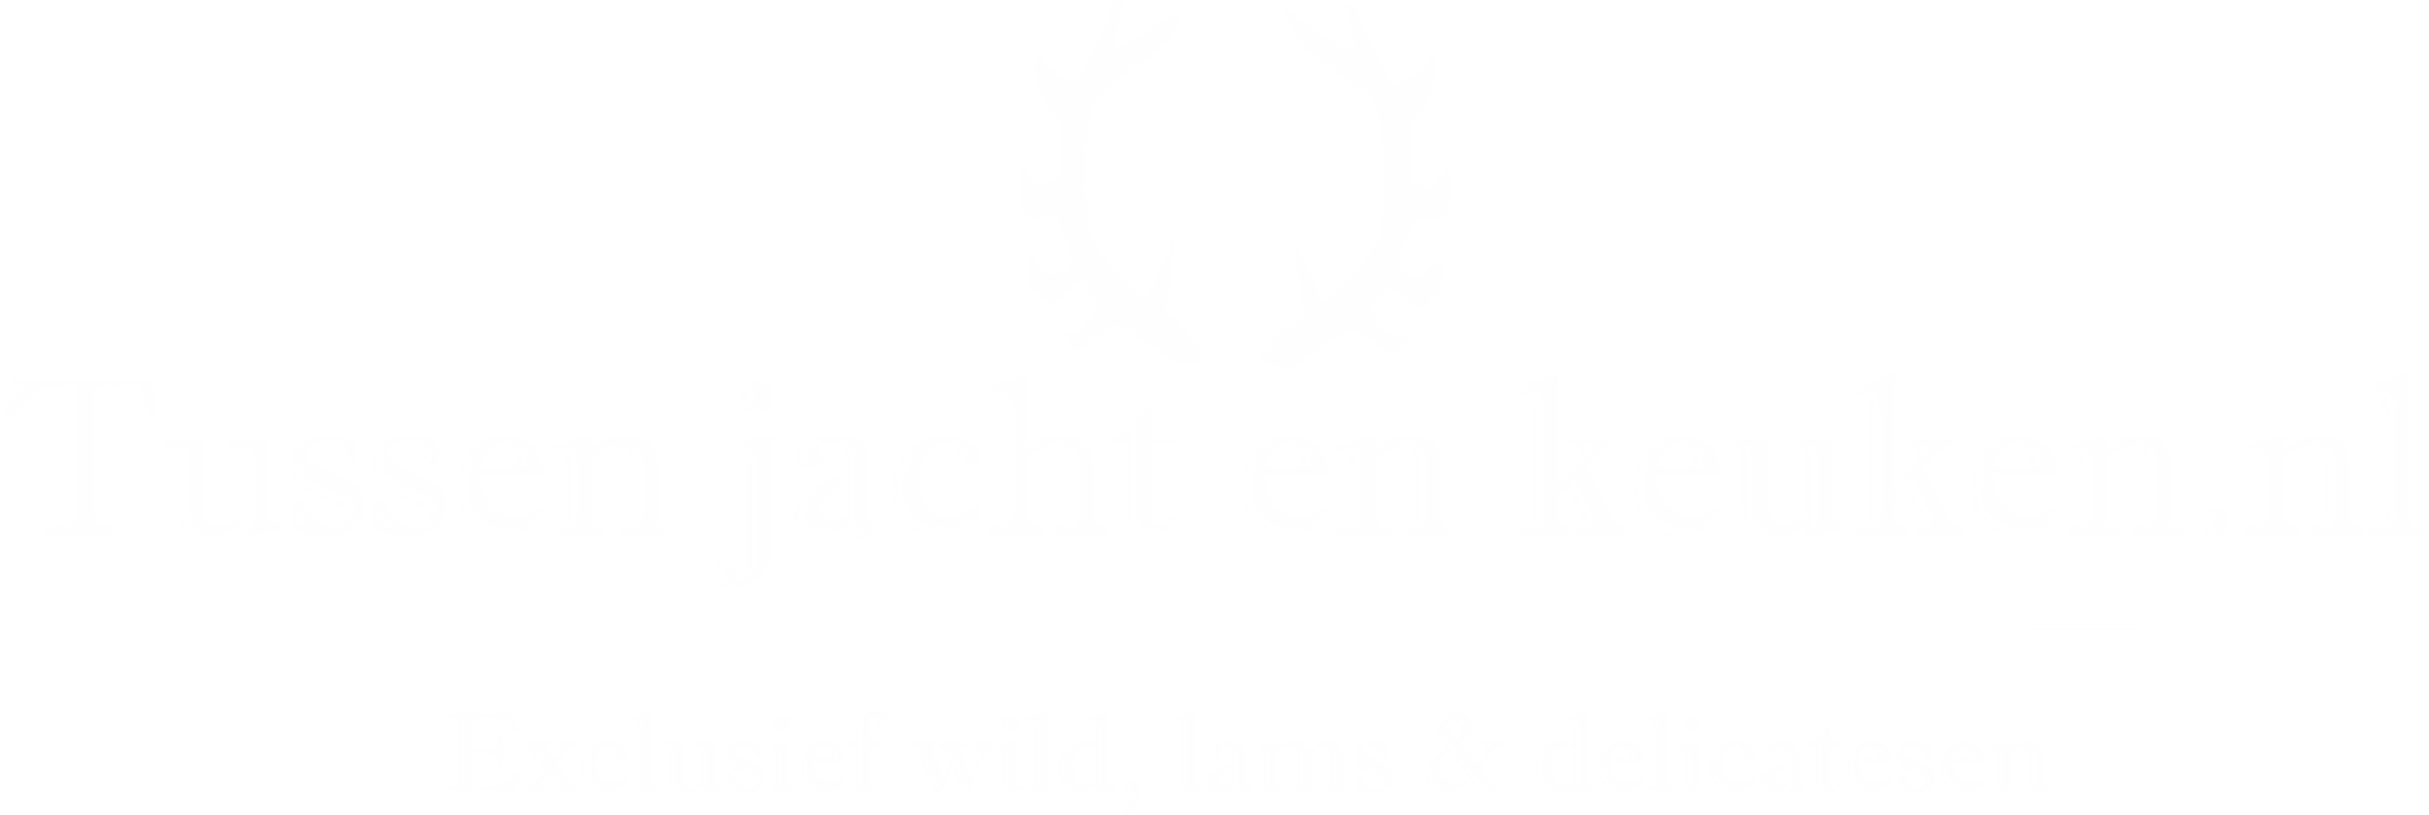 Bestellijst Tussen jacht en keuken logo